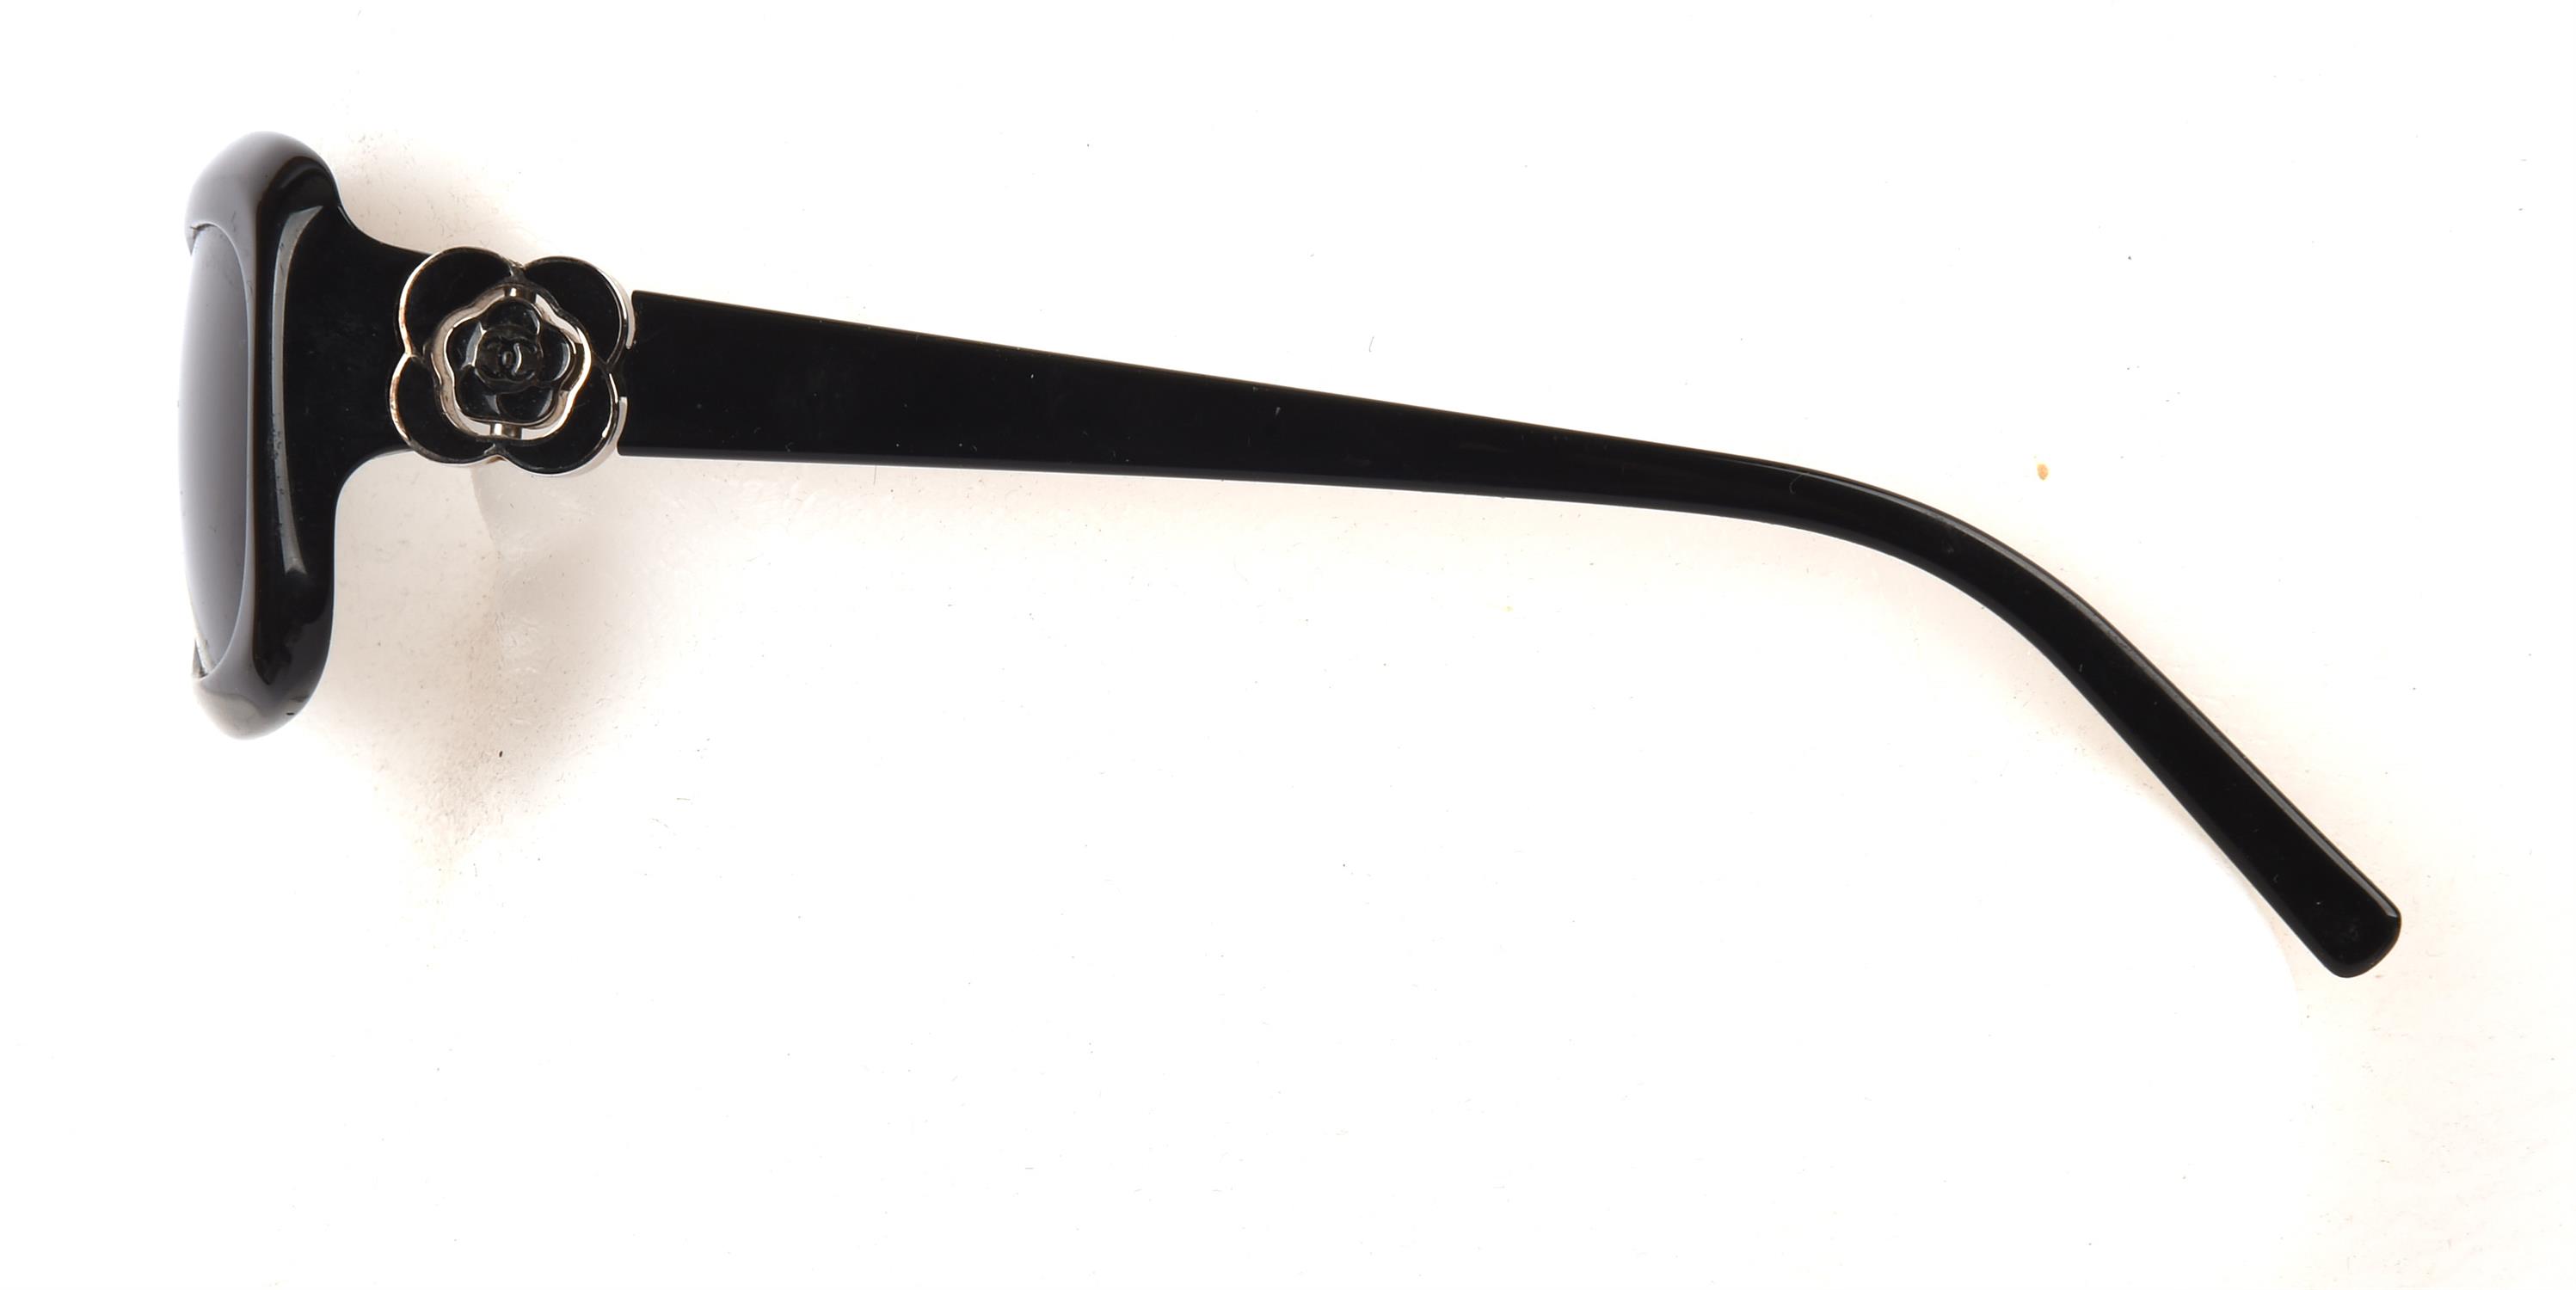 CHANEL vintage 1990s cased ladies black sunglasses - Image 2 of 4